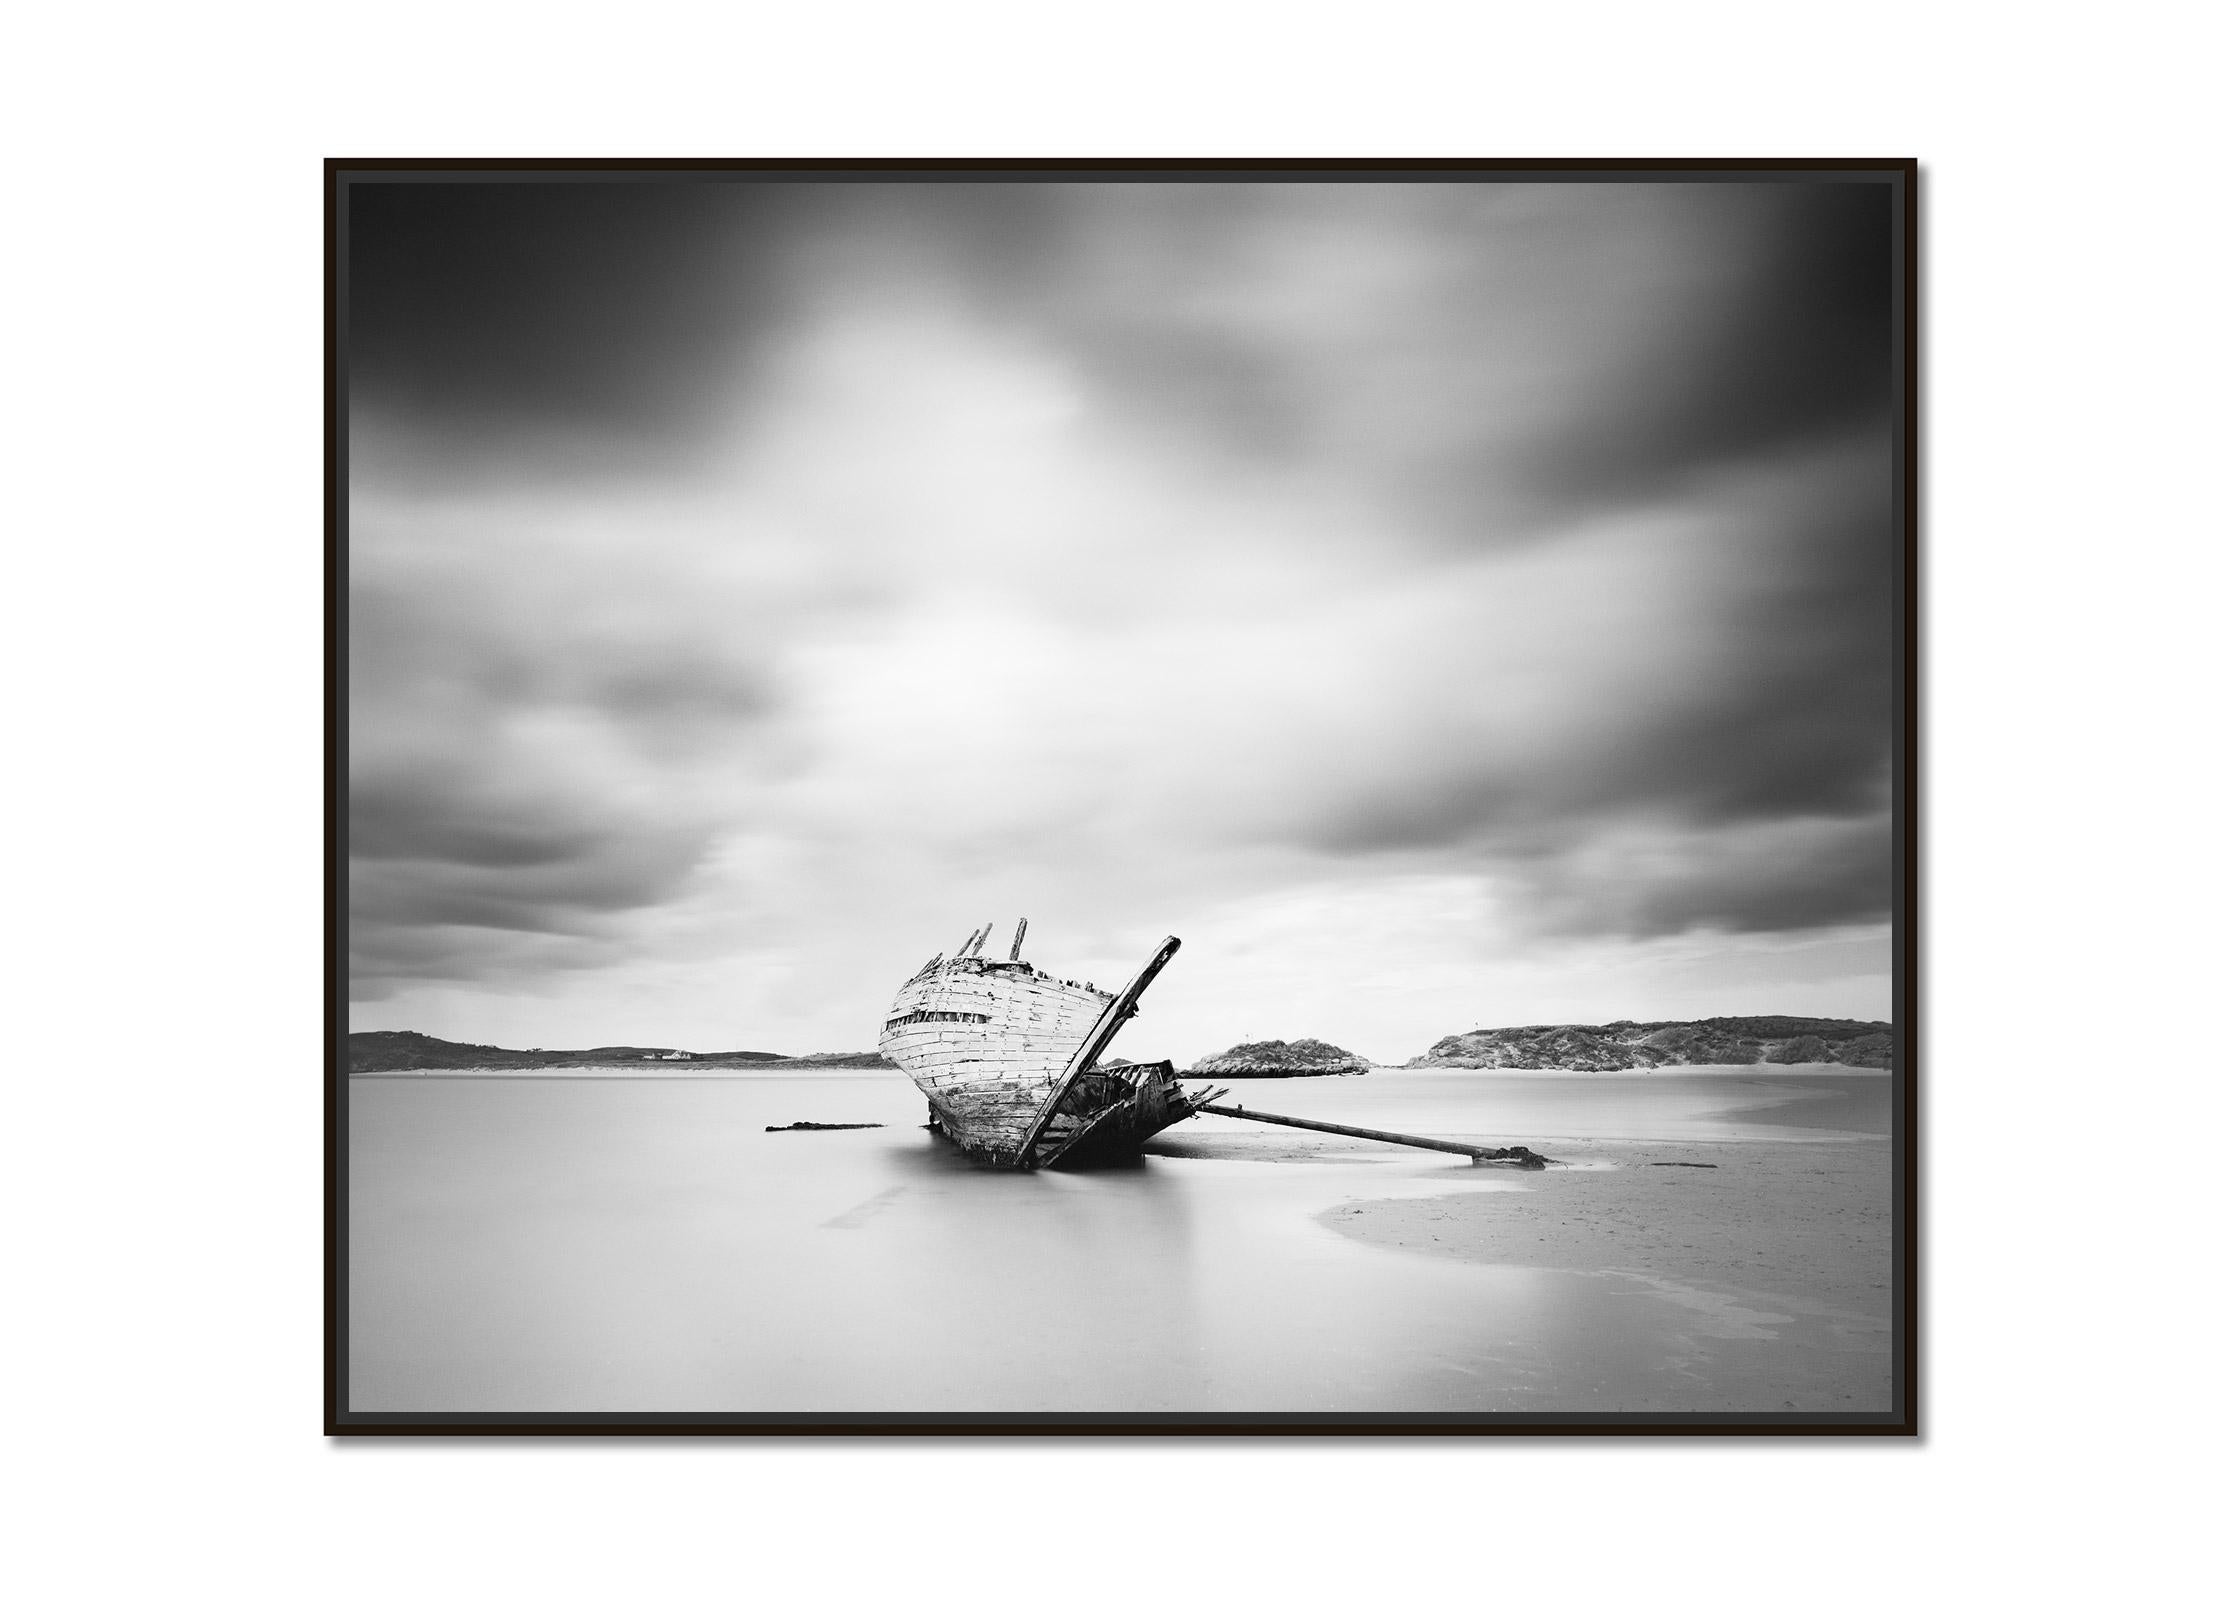 Bad Eddies, Sunken Boat, Beach, Ireland, black and white landscape photography - Photograph by Gerald Berghammer